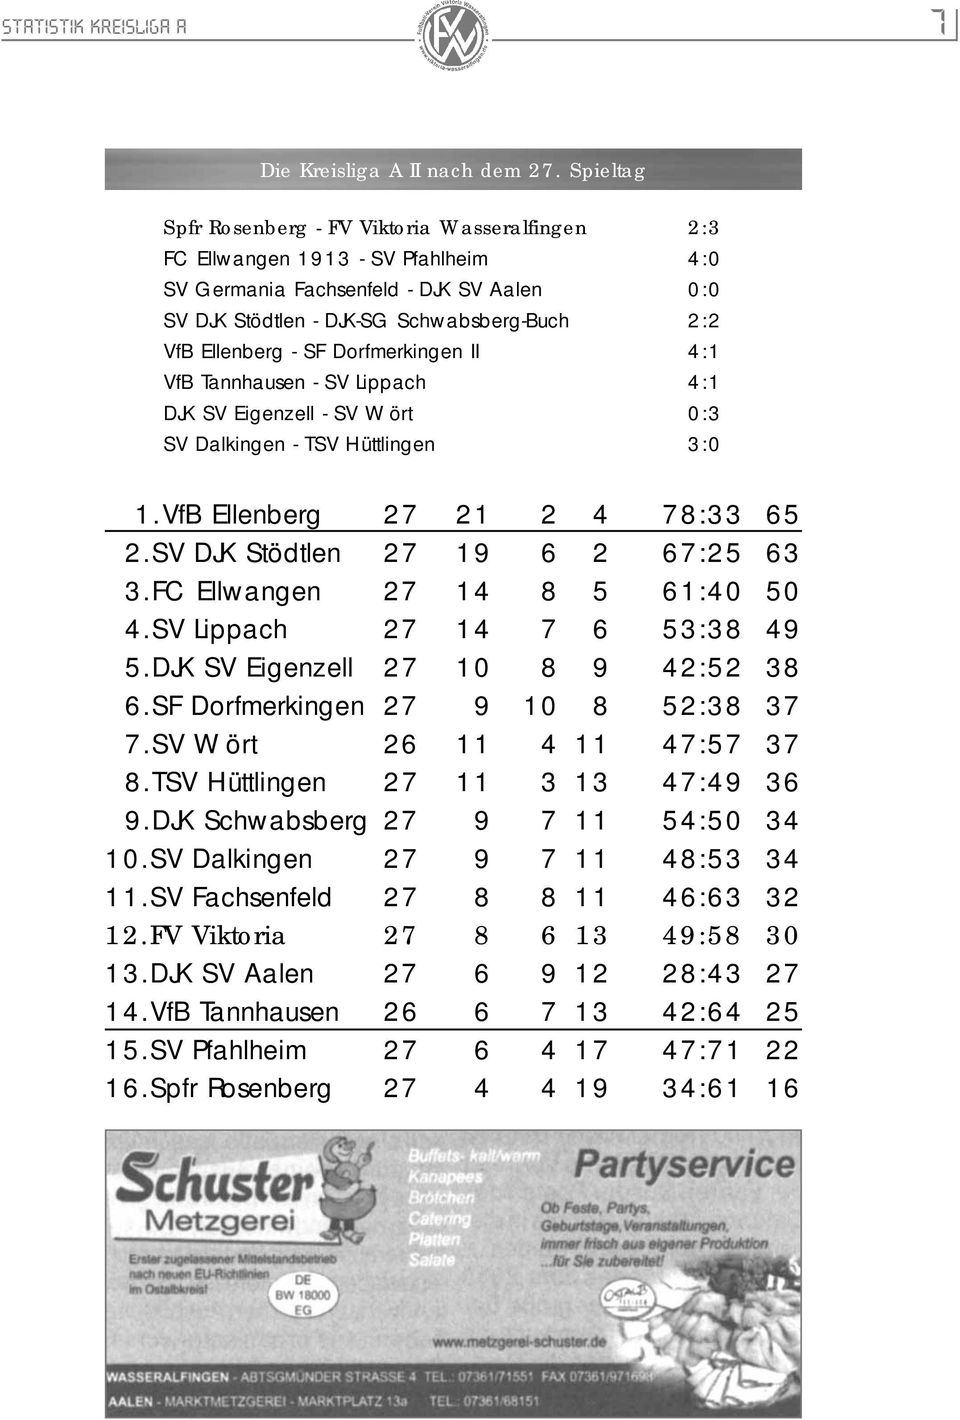 SF Dorfmerkingen II 4:1 VfB Tannhausen - SV Lippach 4:1 DJK SV Eigenzell - SV Wört 0:3 SV Dalkingen - TSV Hüttlingen 3:0 1.VfB Ellenberg 27 21 2 4 78:33 65 2.SV DJK Stödtlen 27 19 6 2 67:25 63 3.